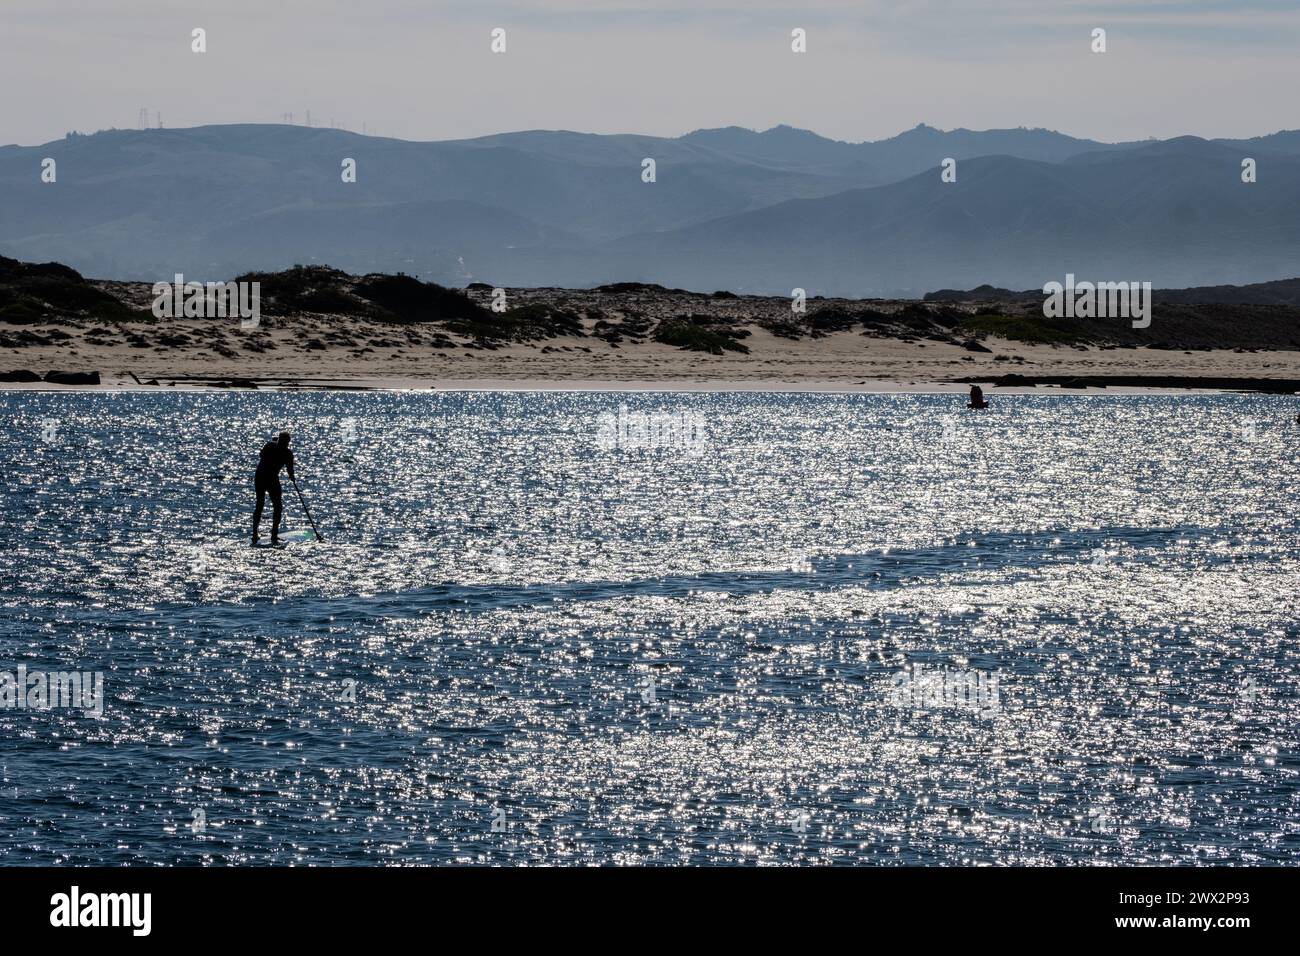 Standup paddle boarder at Morro Rock and Morro Bay, Pacific Ocean, Morro Bay, California, USA. Stock Photo